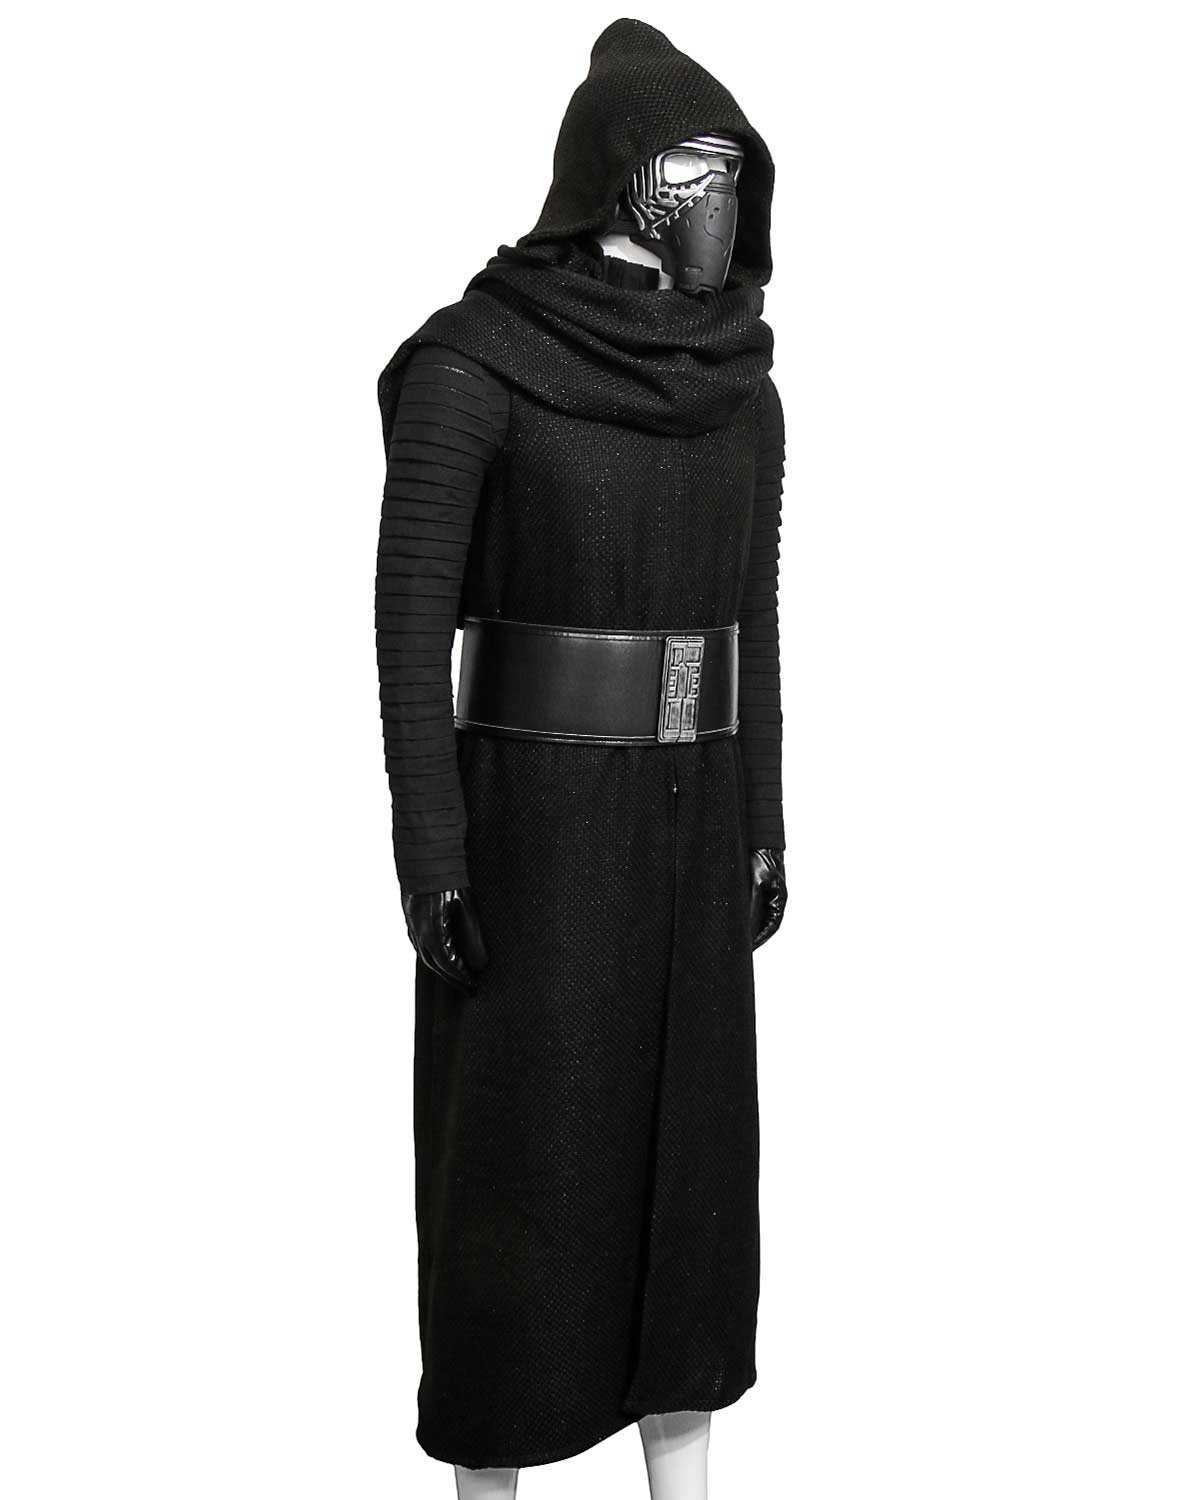 Kylo Ren Star Wars The Force Awakens Cosplay Costume